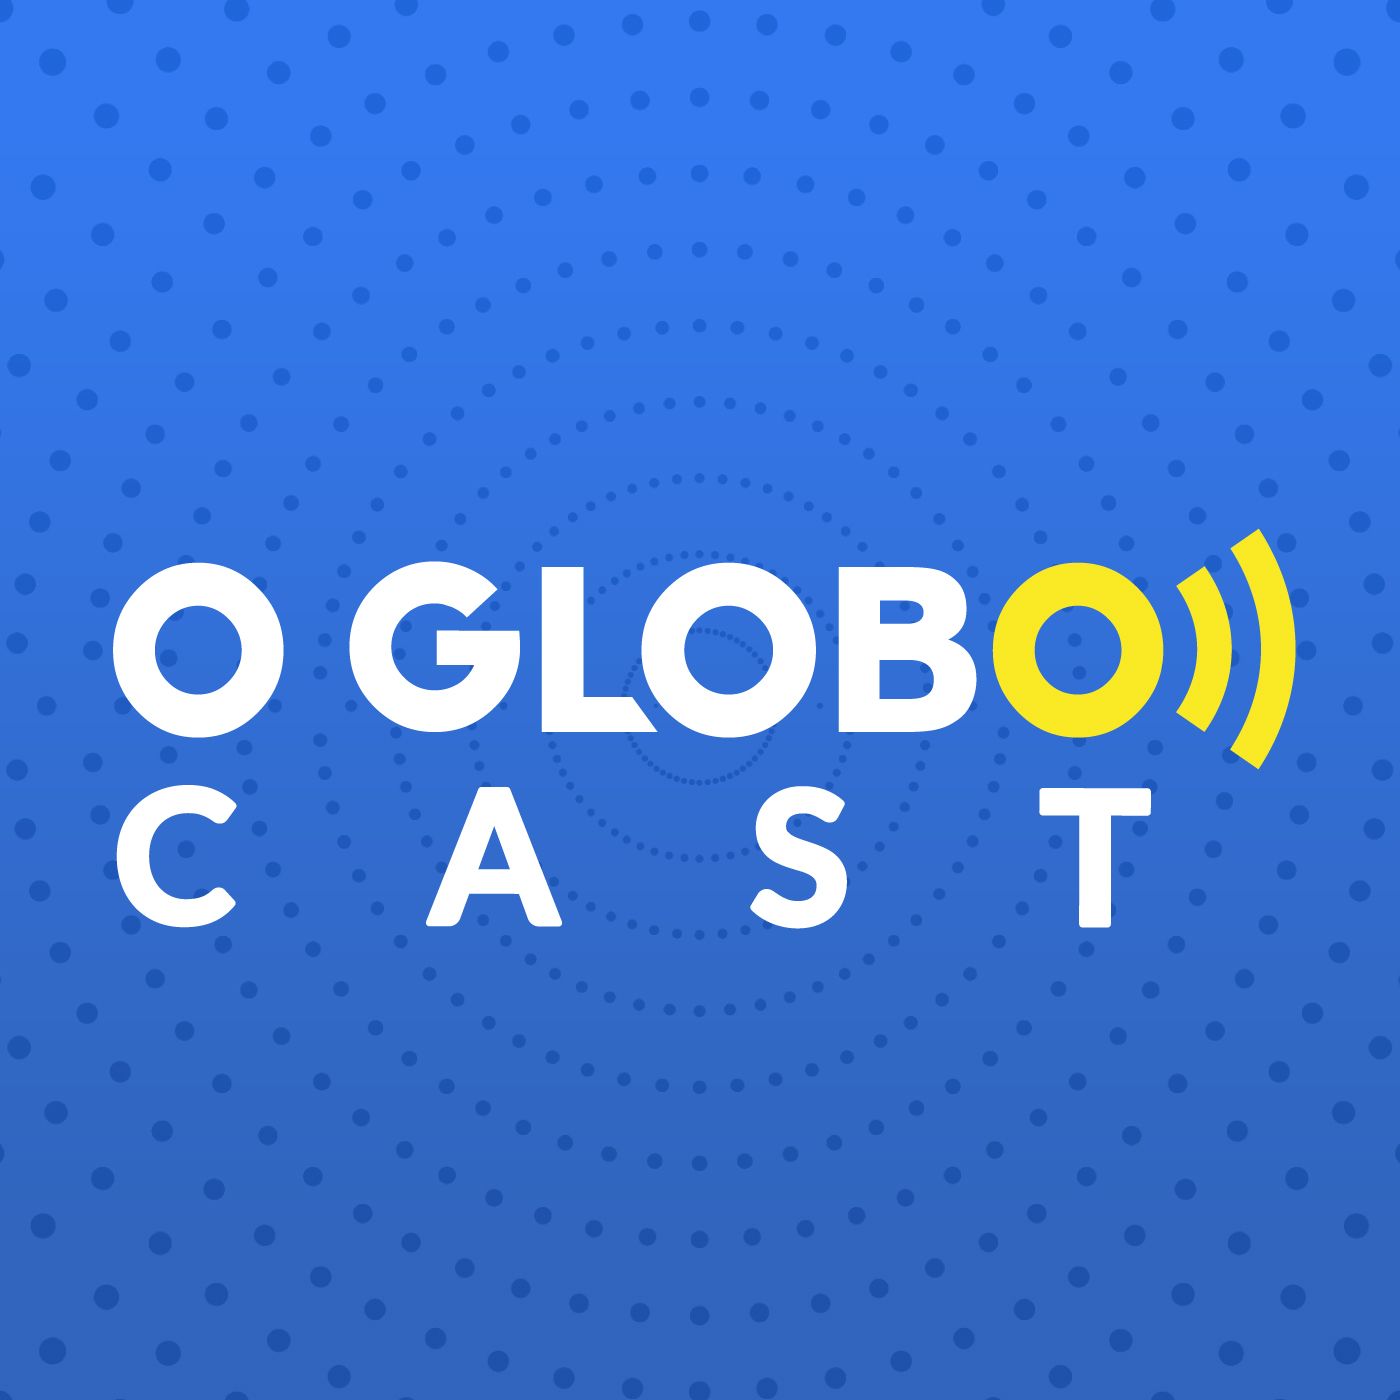 O Globocast